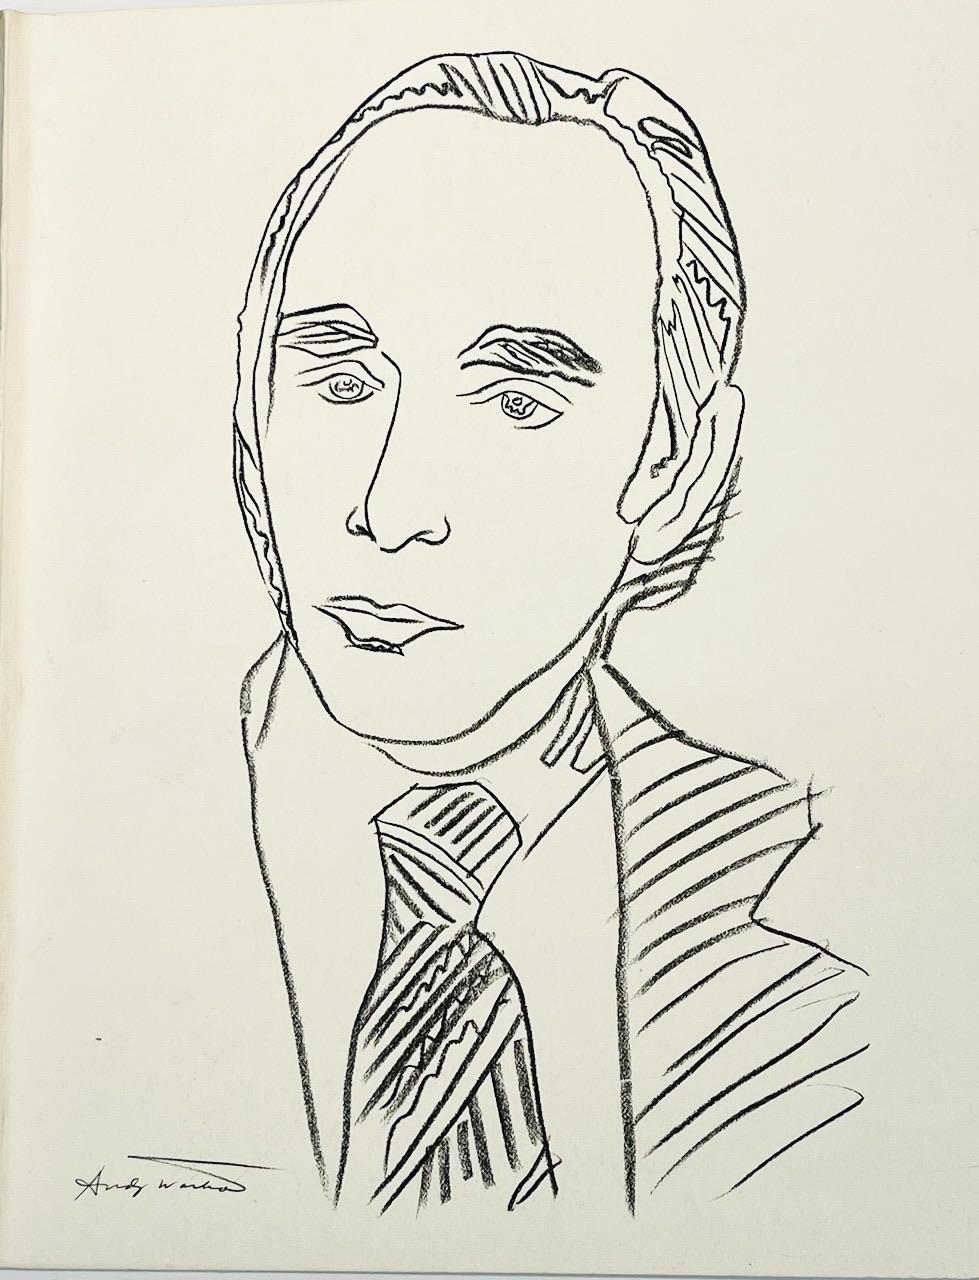 Leo Castelli: Twenty Years, Softcover catalog, New York, 1977  - Pop Art Art by Andy Warhol